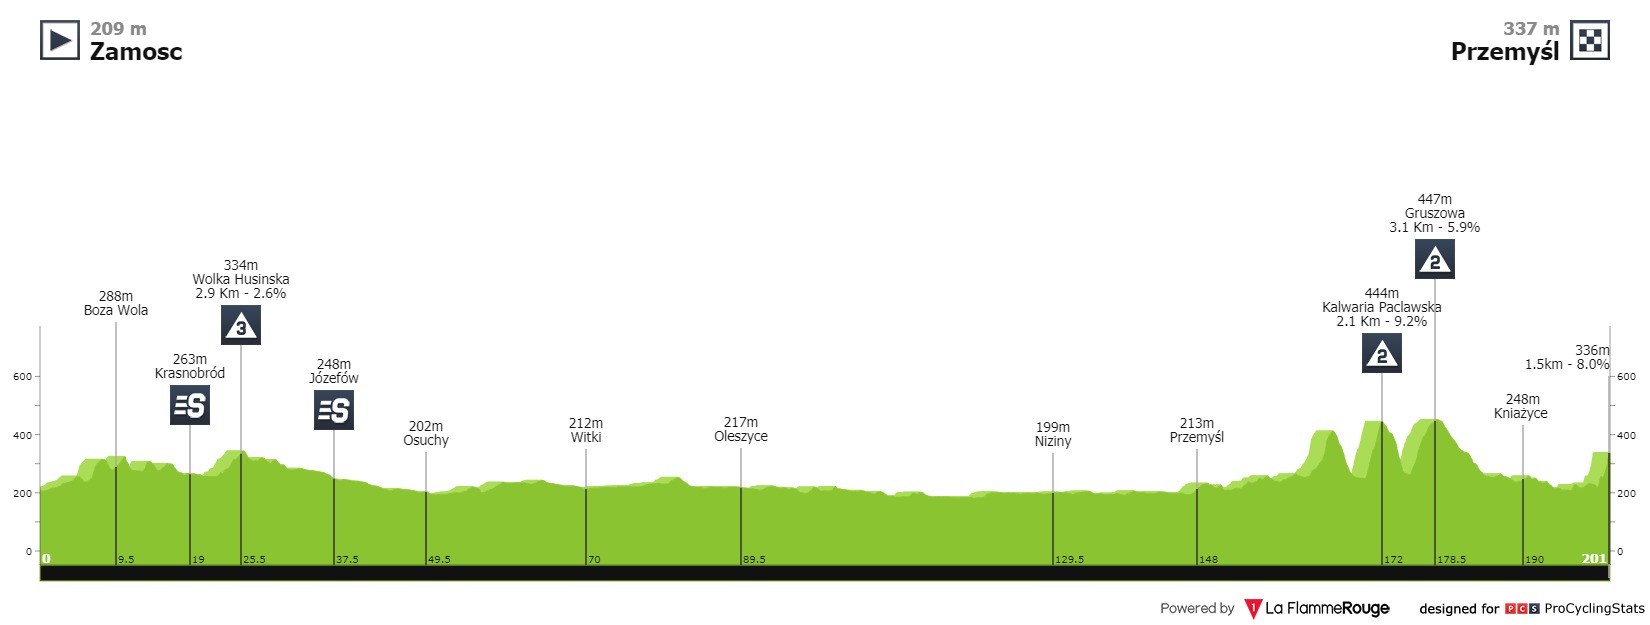 tour-de-pologne-2021-stage-2-profile-3161b70f74.jpg